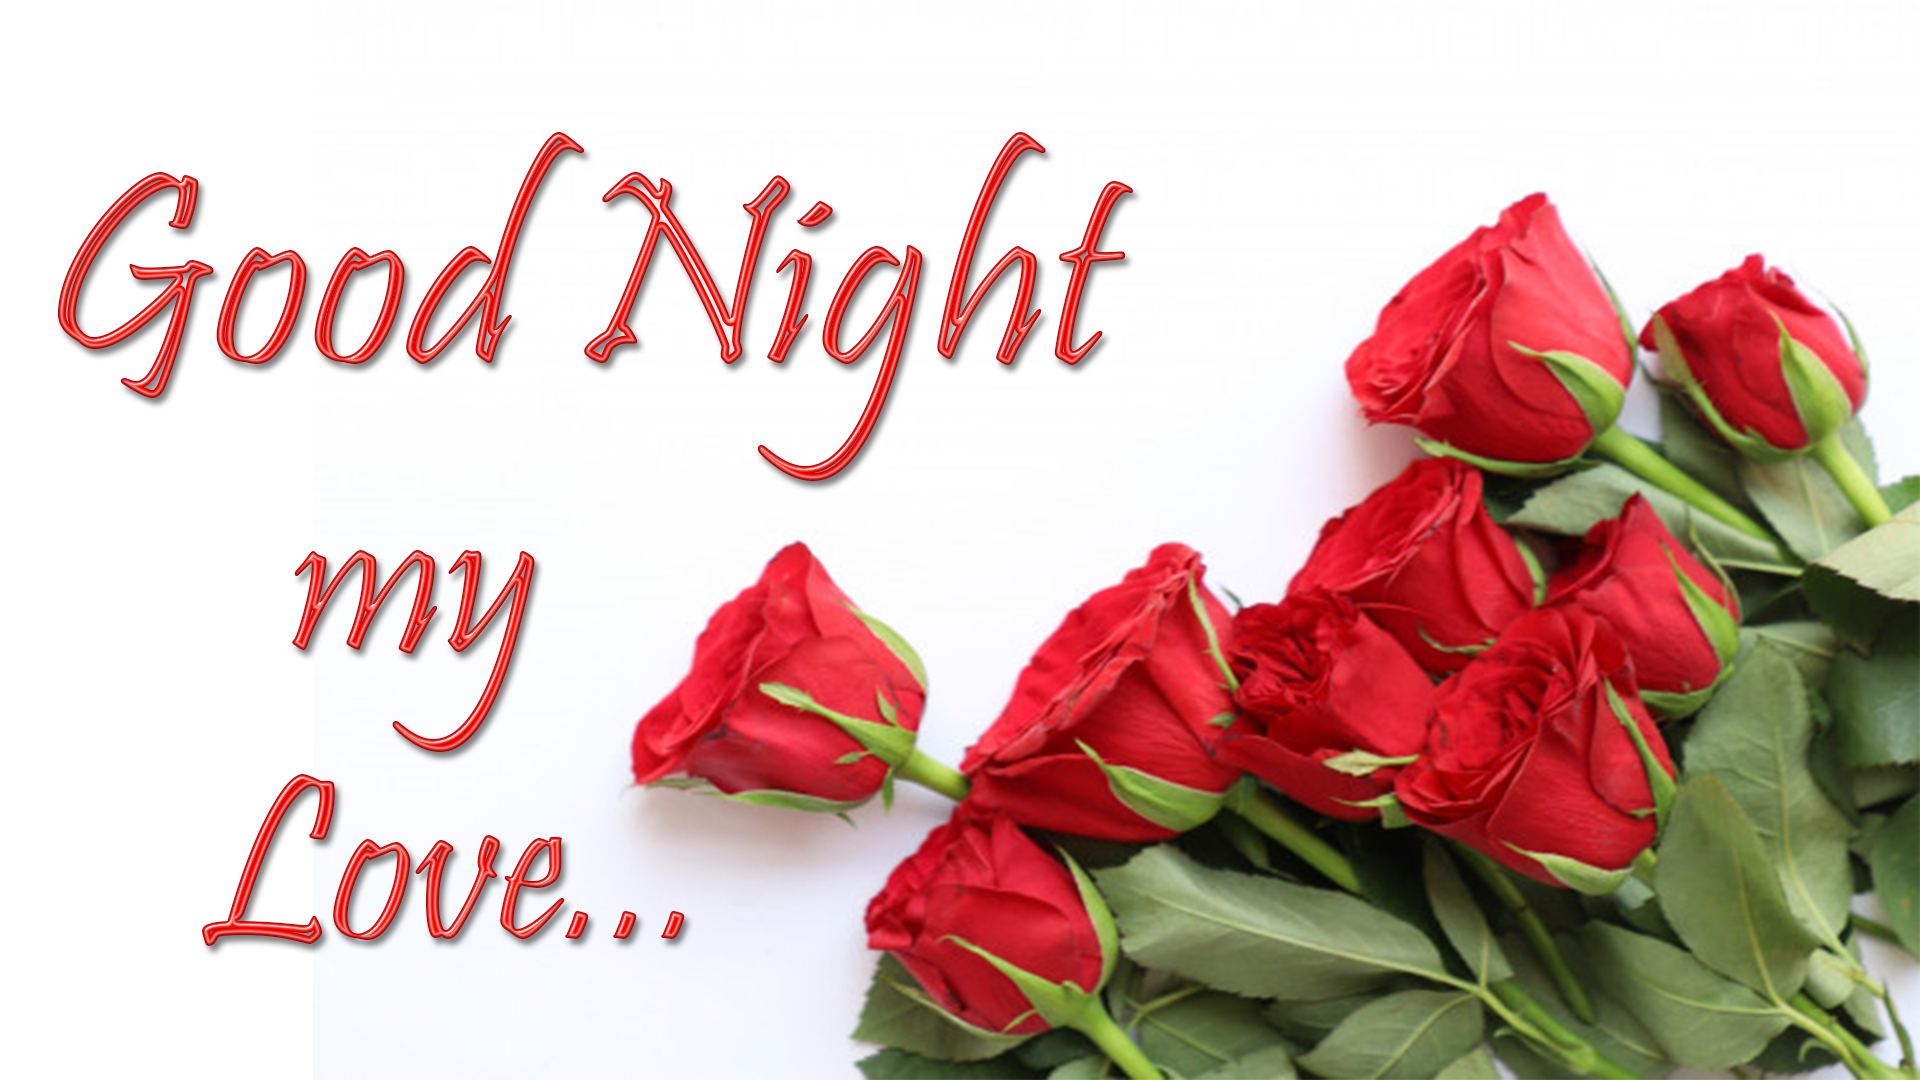 night lovely wishes image